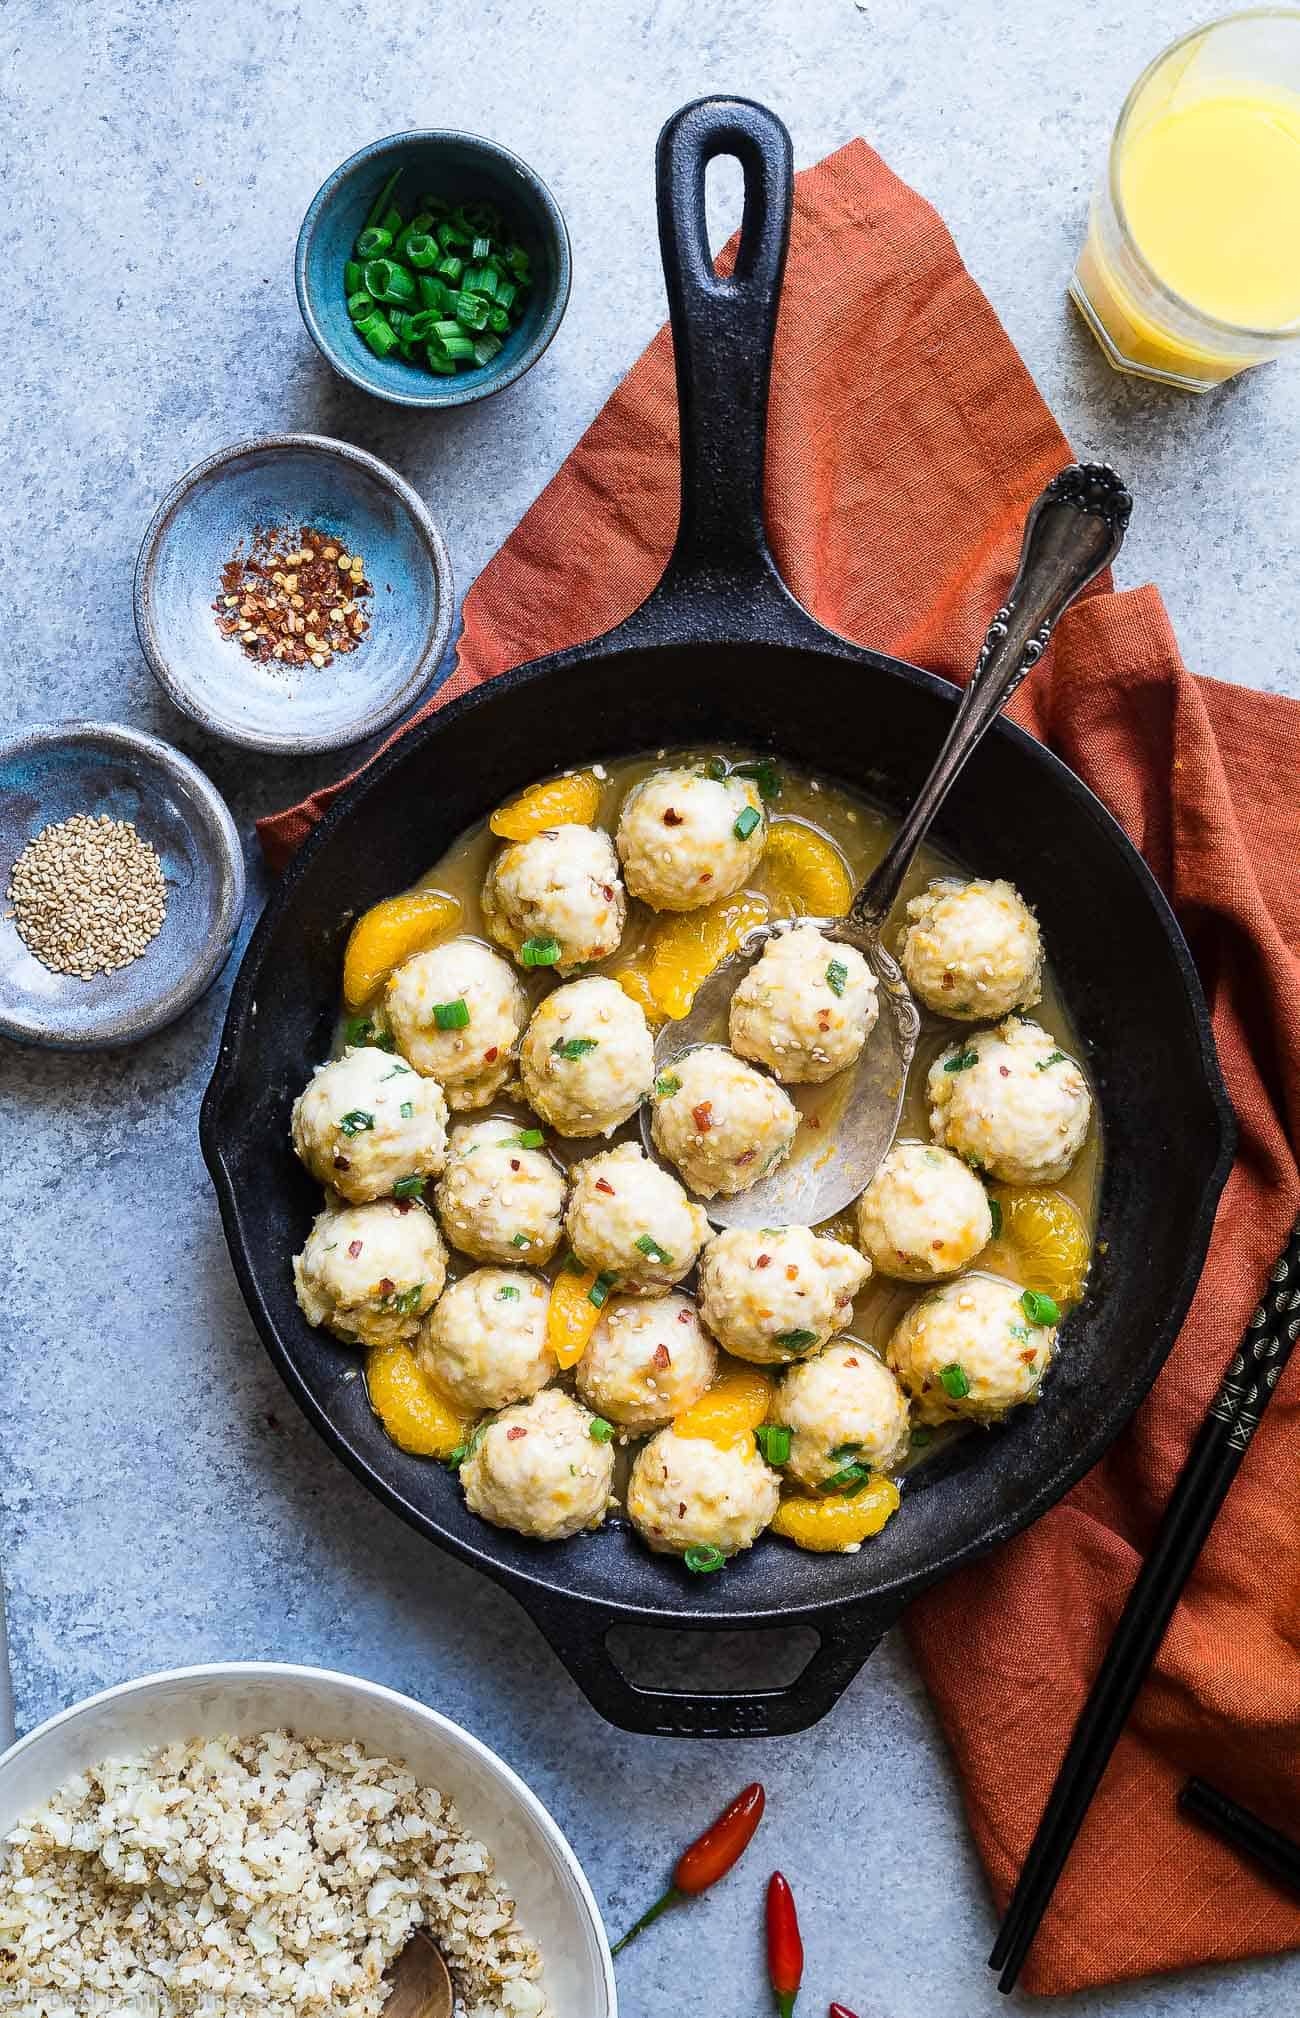 Whole30 Orange Turkey Meatballs - These easy, paleo friendly meatballs taste like Asian orange chicken in meatball form! They're a family friendly gluten/grain/dairy/sugar free weeknight meal, that's under 300 calories! You won't miss the deep frying! | #Foodfaithfitness | #paleo #whole30 #glutenfree #meatballs #healthy